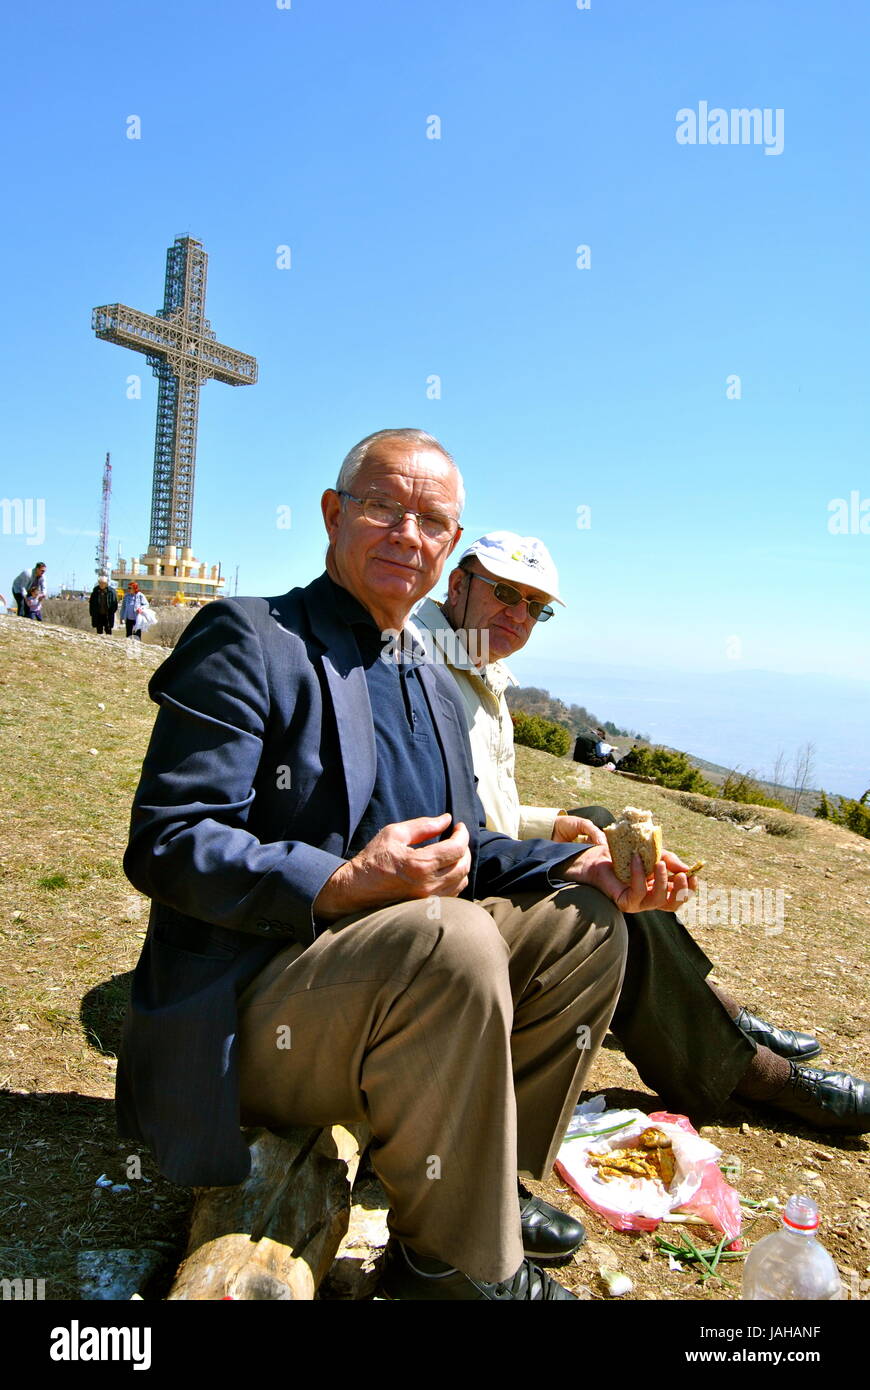 Old men having a picnic at the Millenium Cross, Skopje, Macedonia Stock Photo